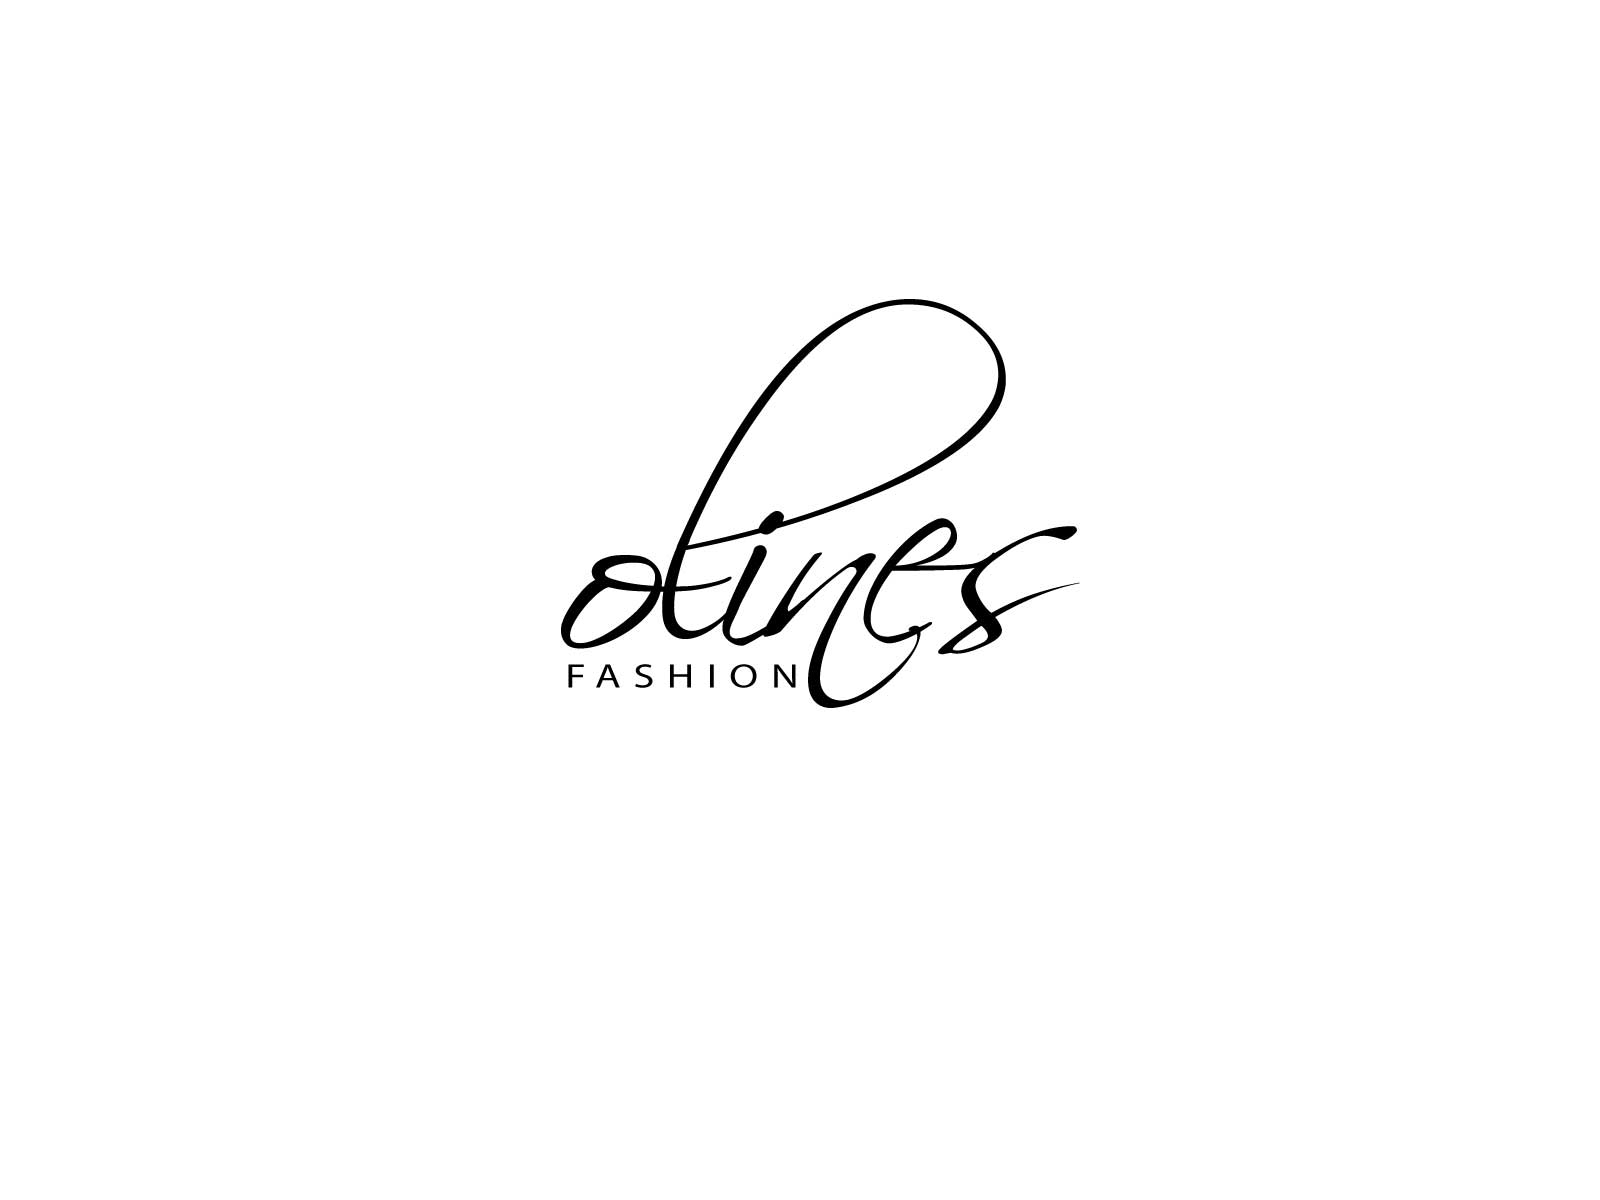 olines fashion logo by lima sultana on Dribbble